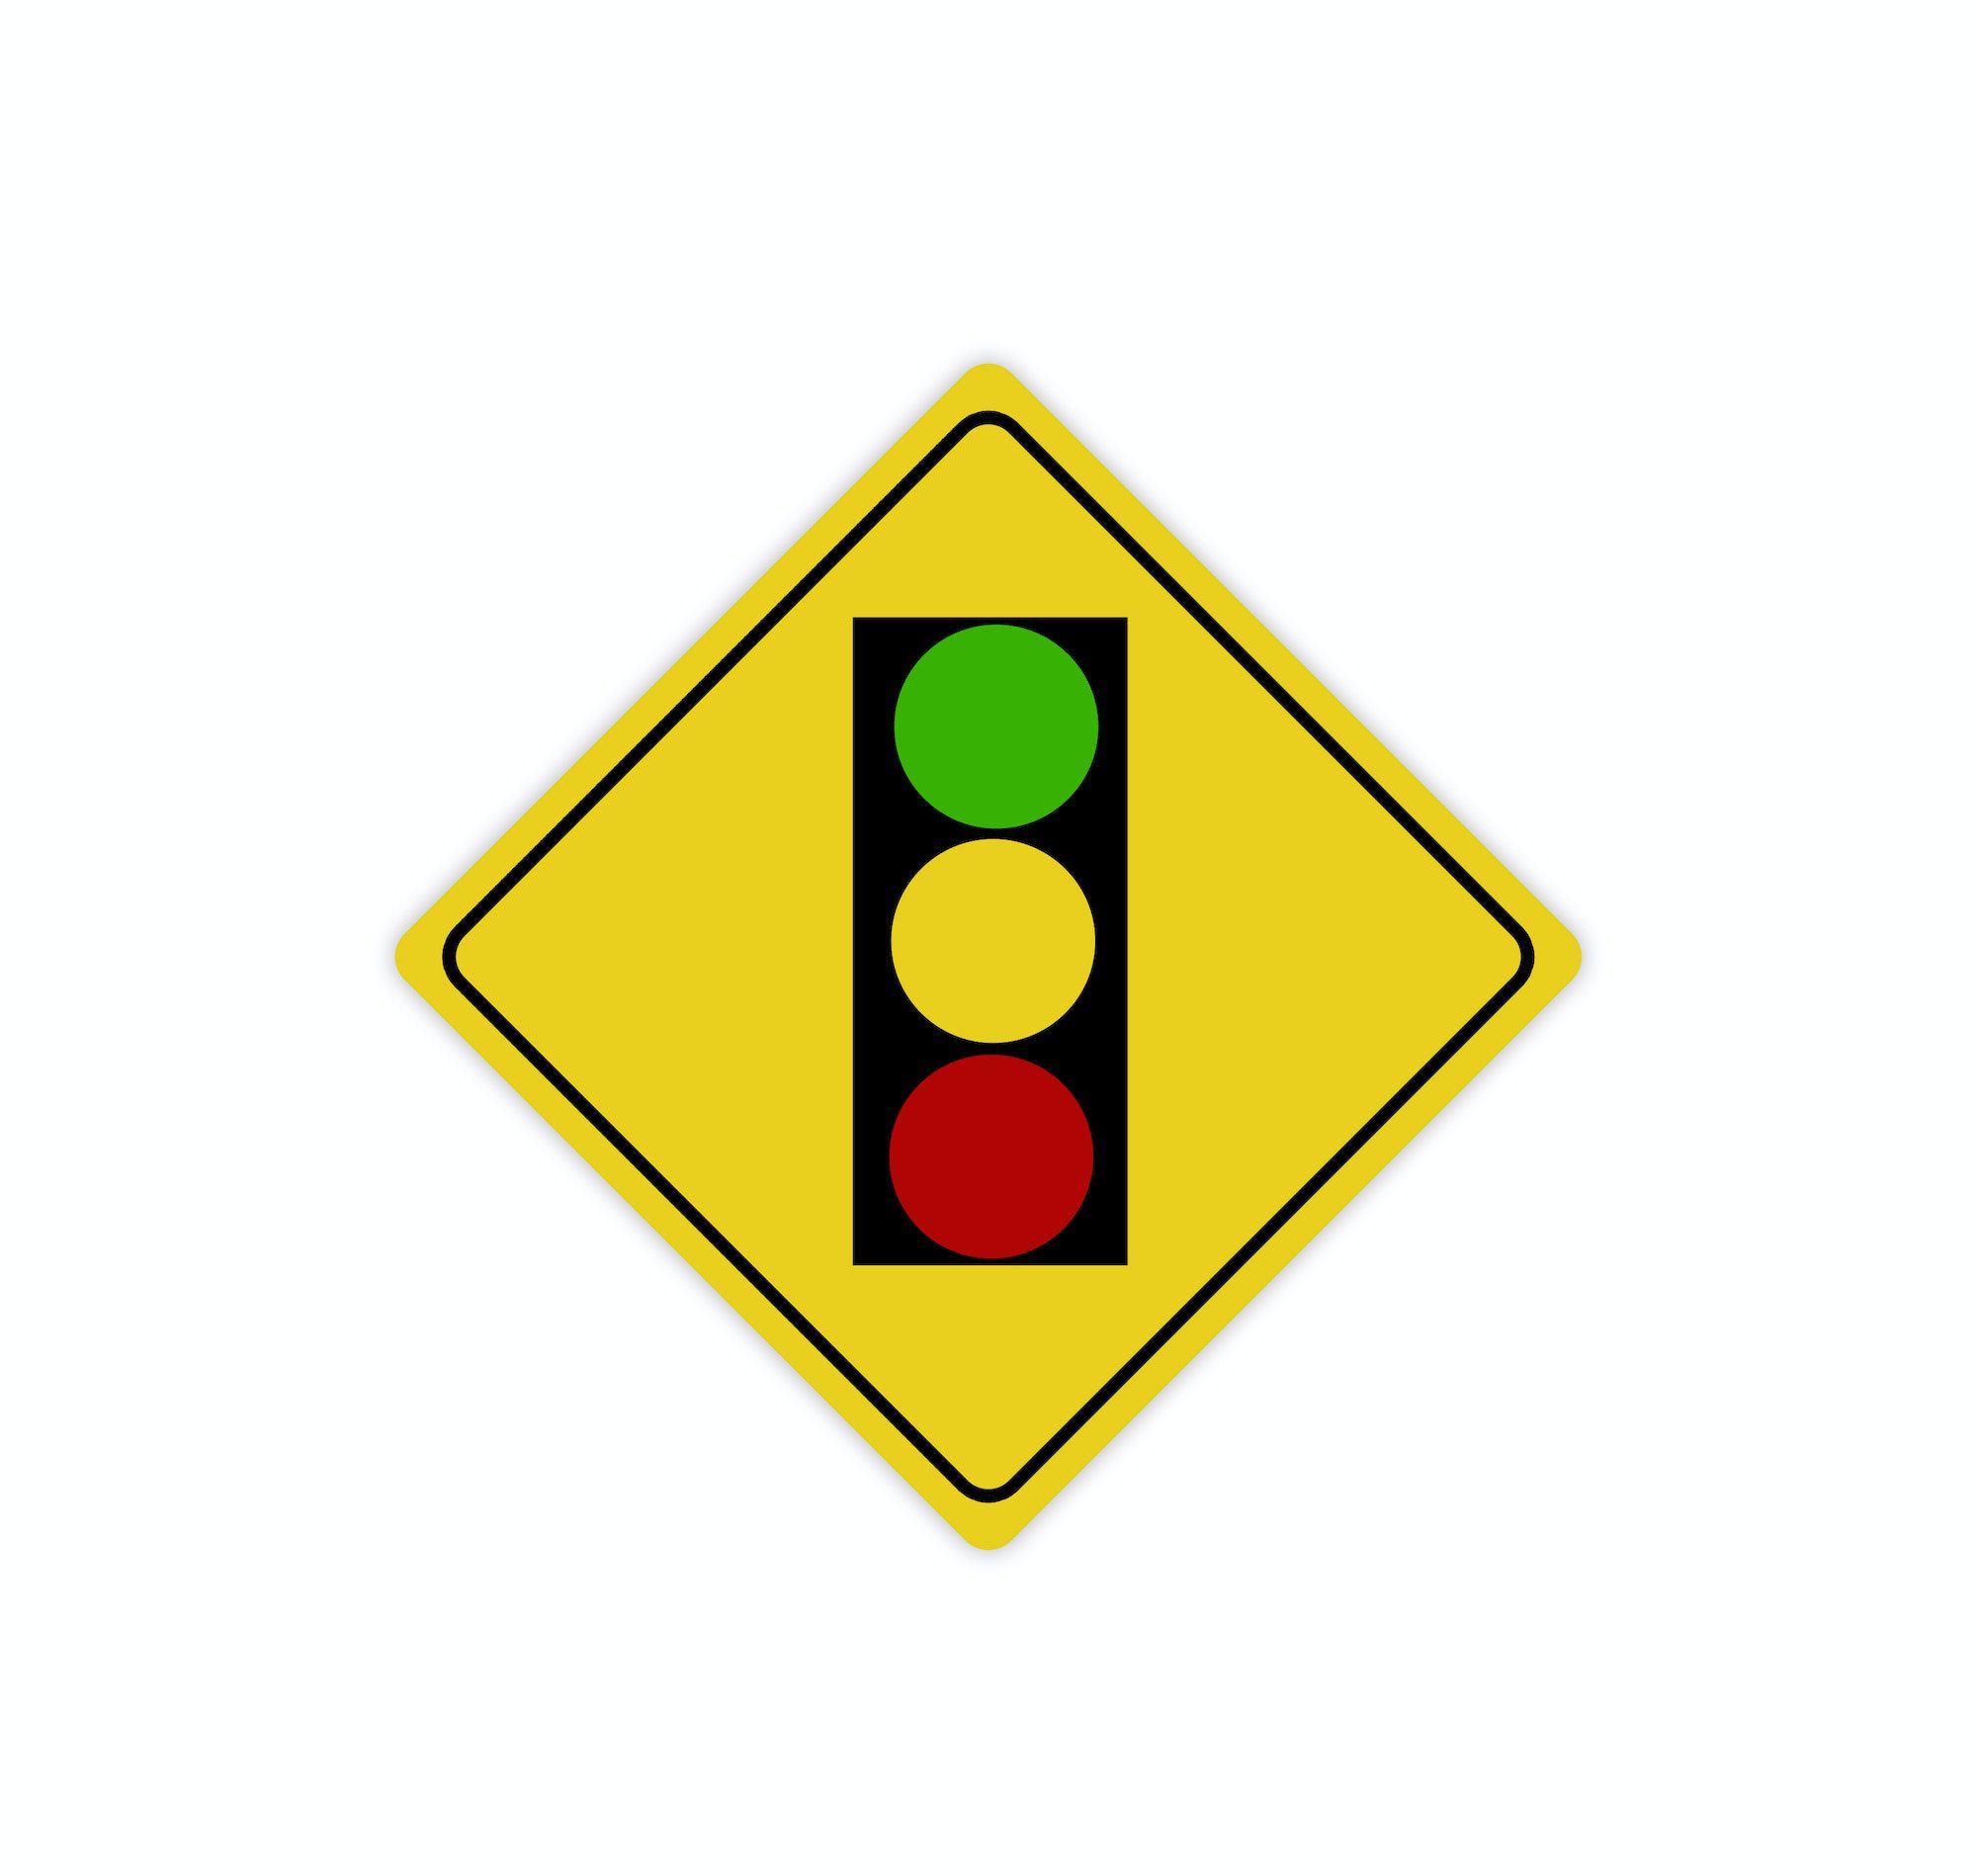 semaphore traffic light isolated